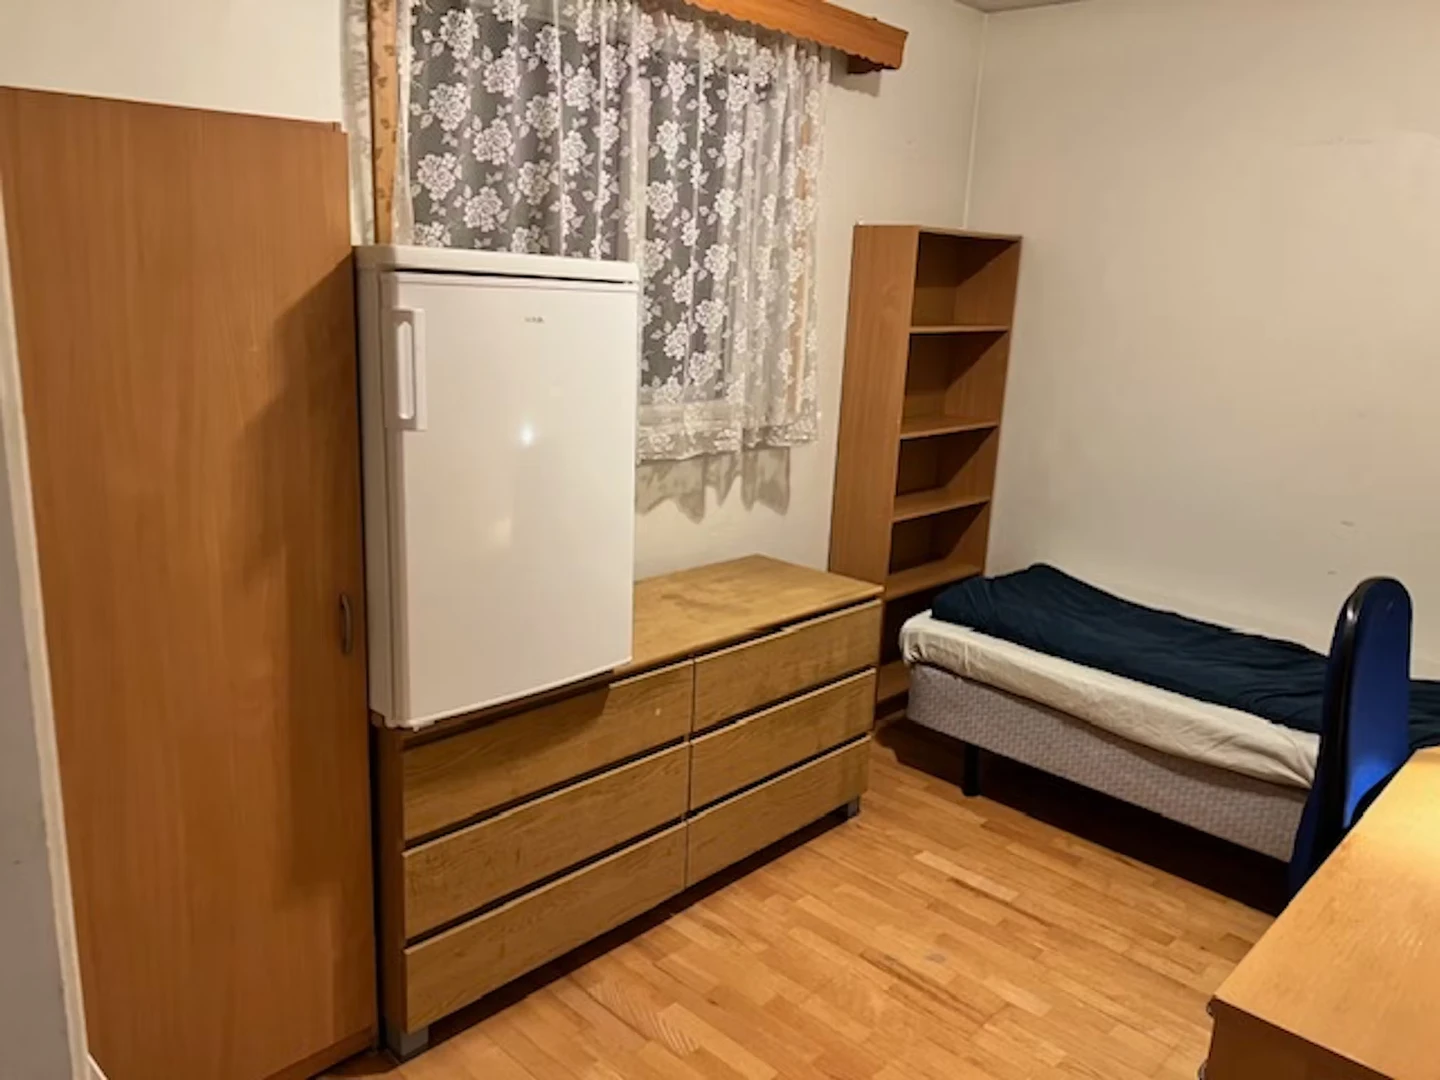 Cheap private room in reykjavik